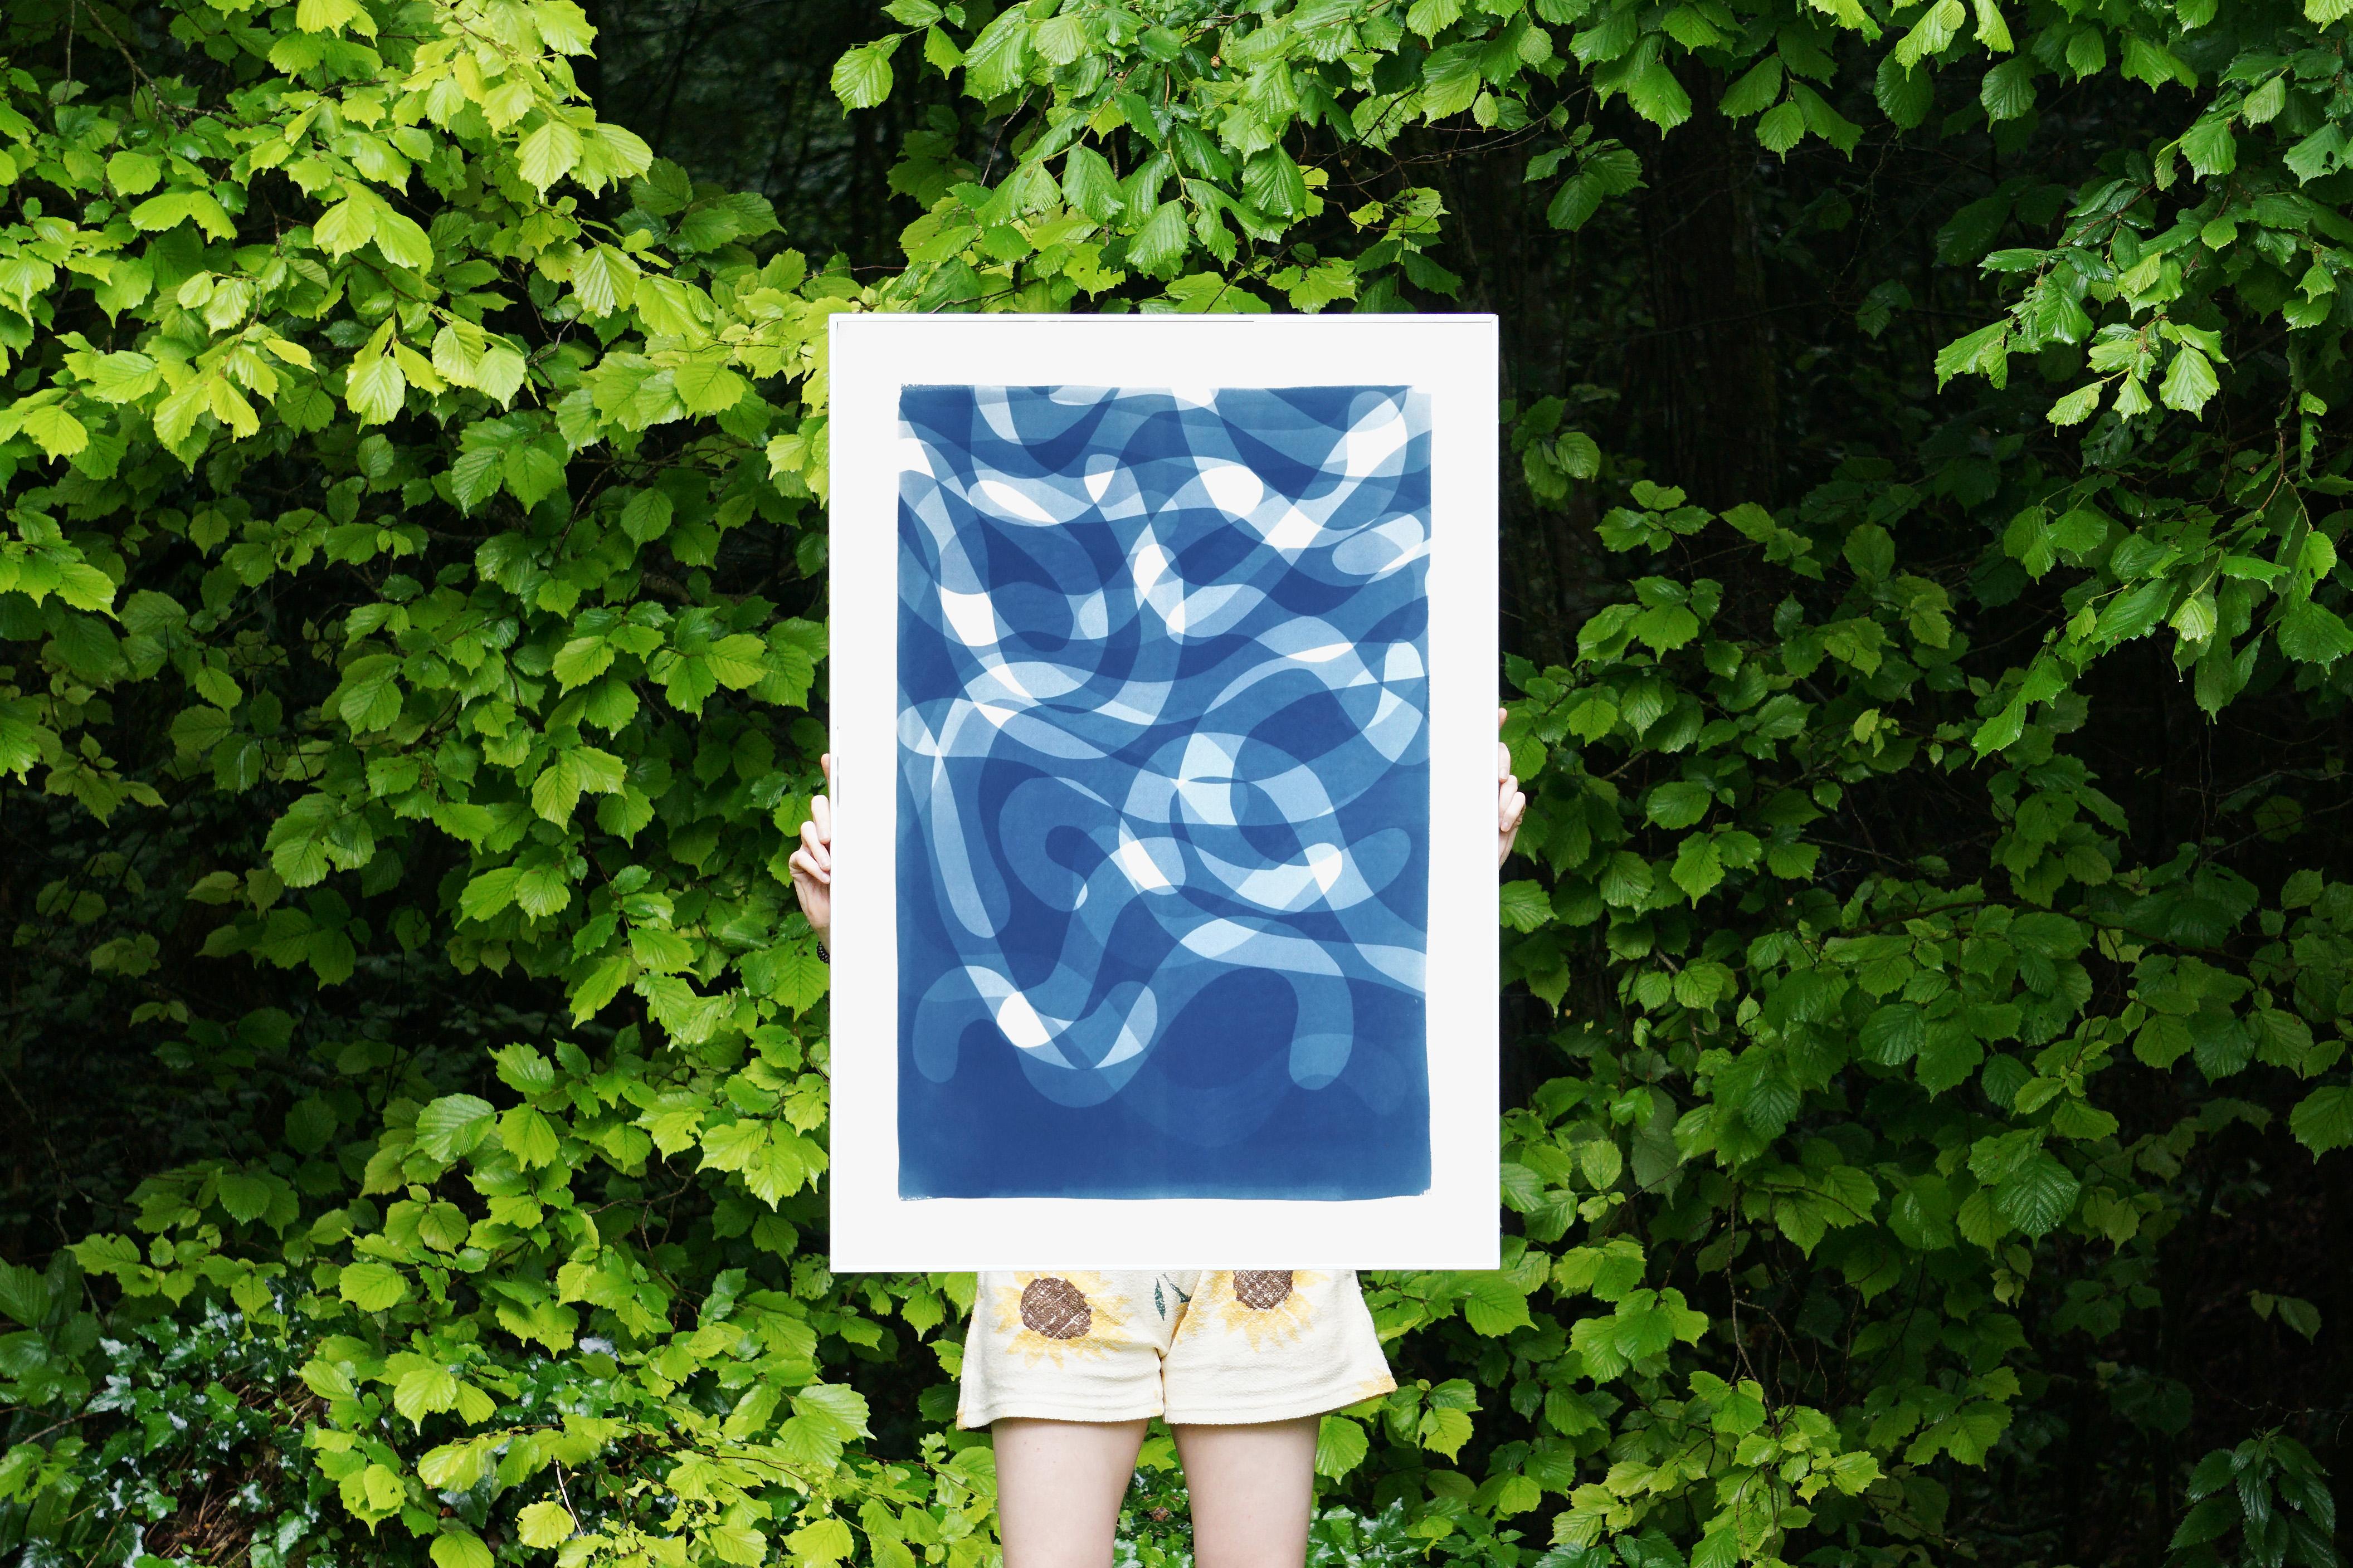 Falling Swirls, Organic Curvy Layers in Blue Tones, Handmade Cyanotype on Paper - Post-Modern Photograph by Kind of Cyan